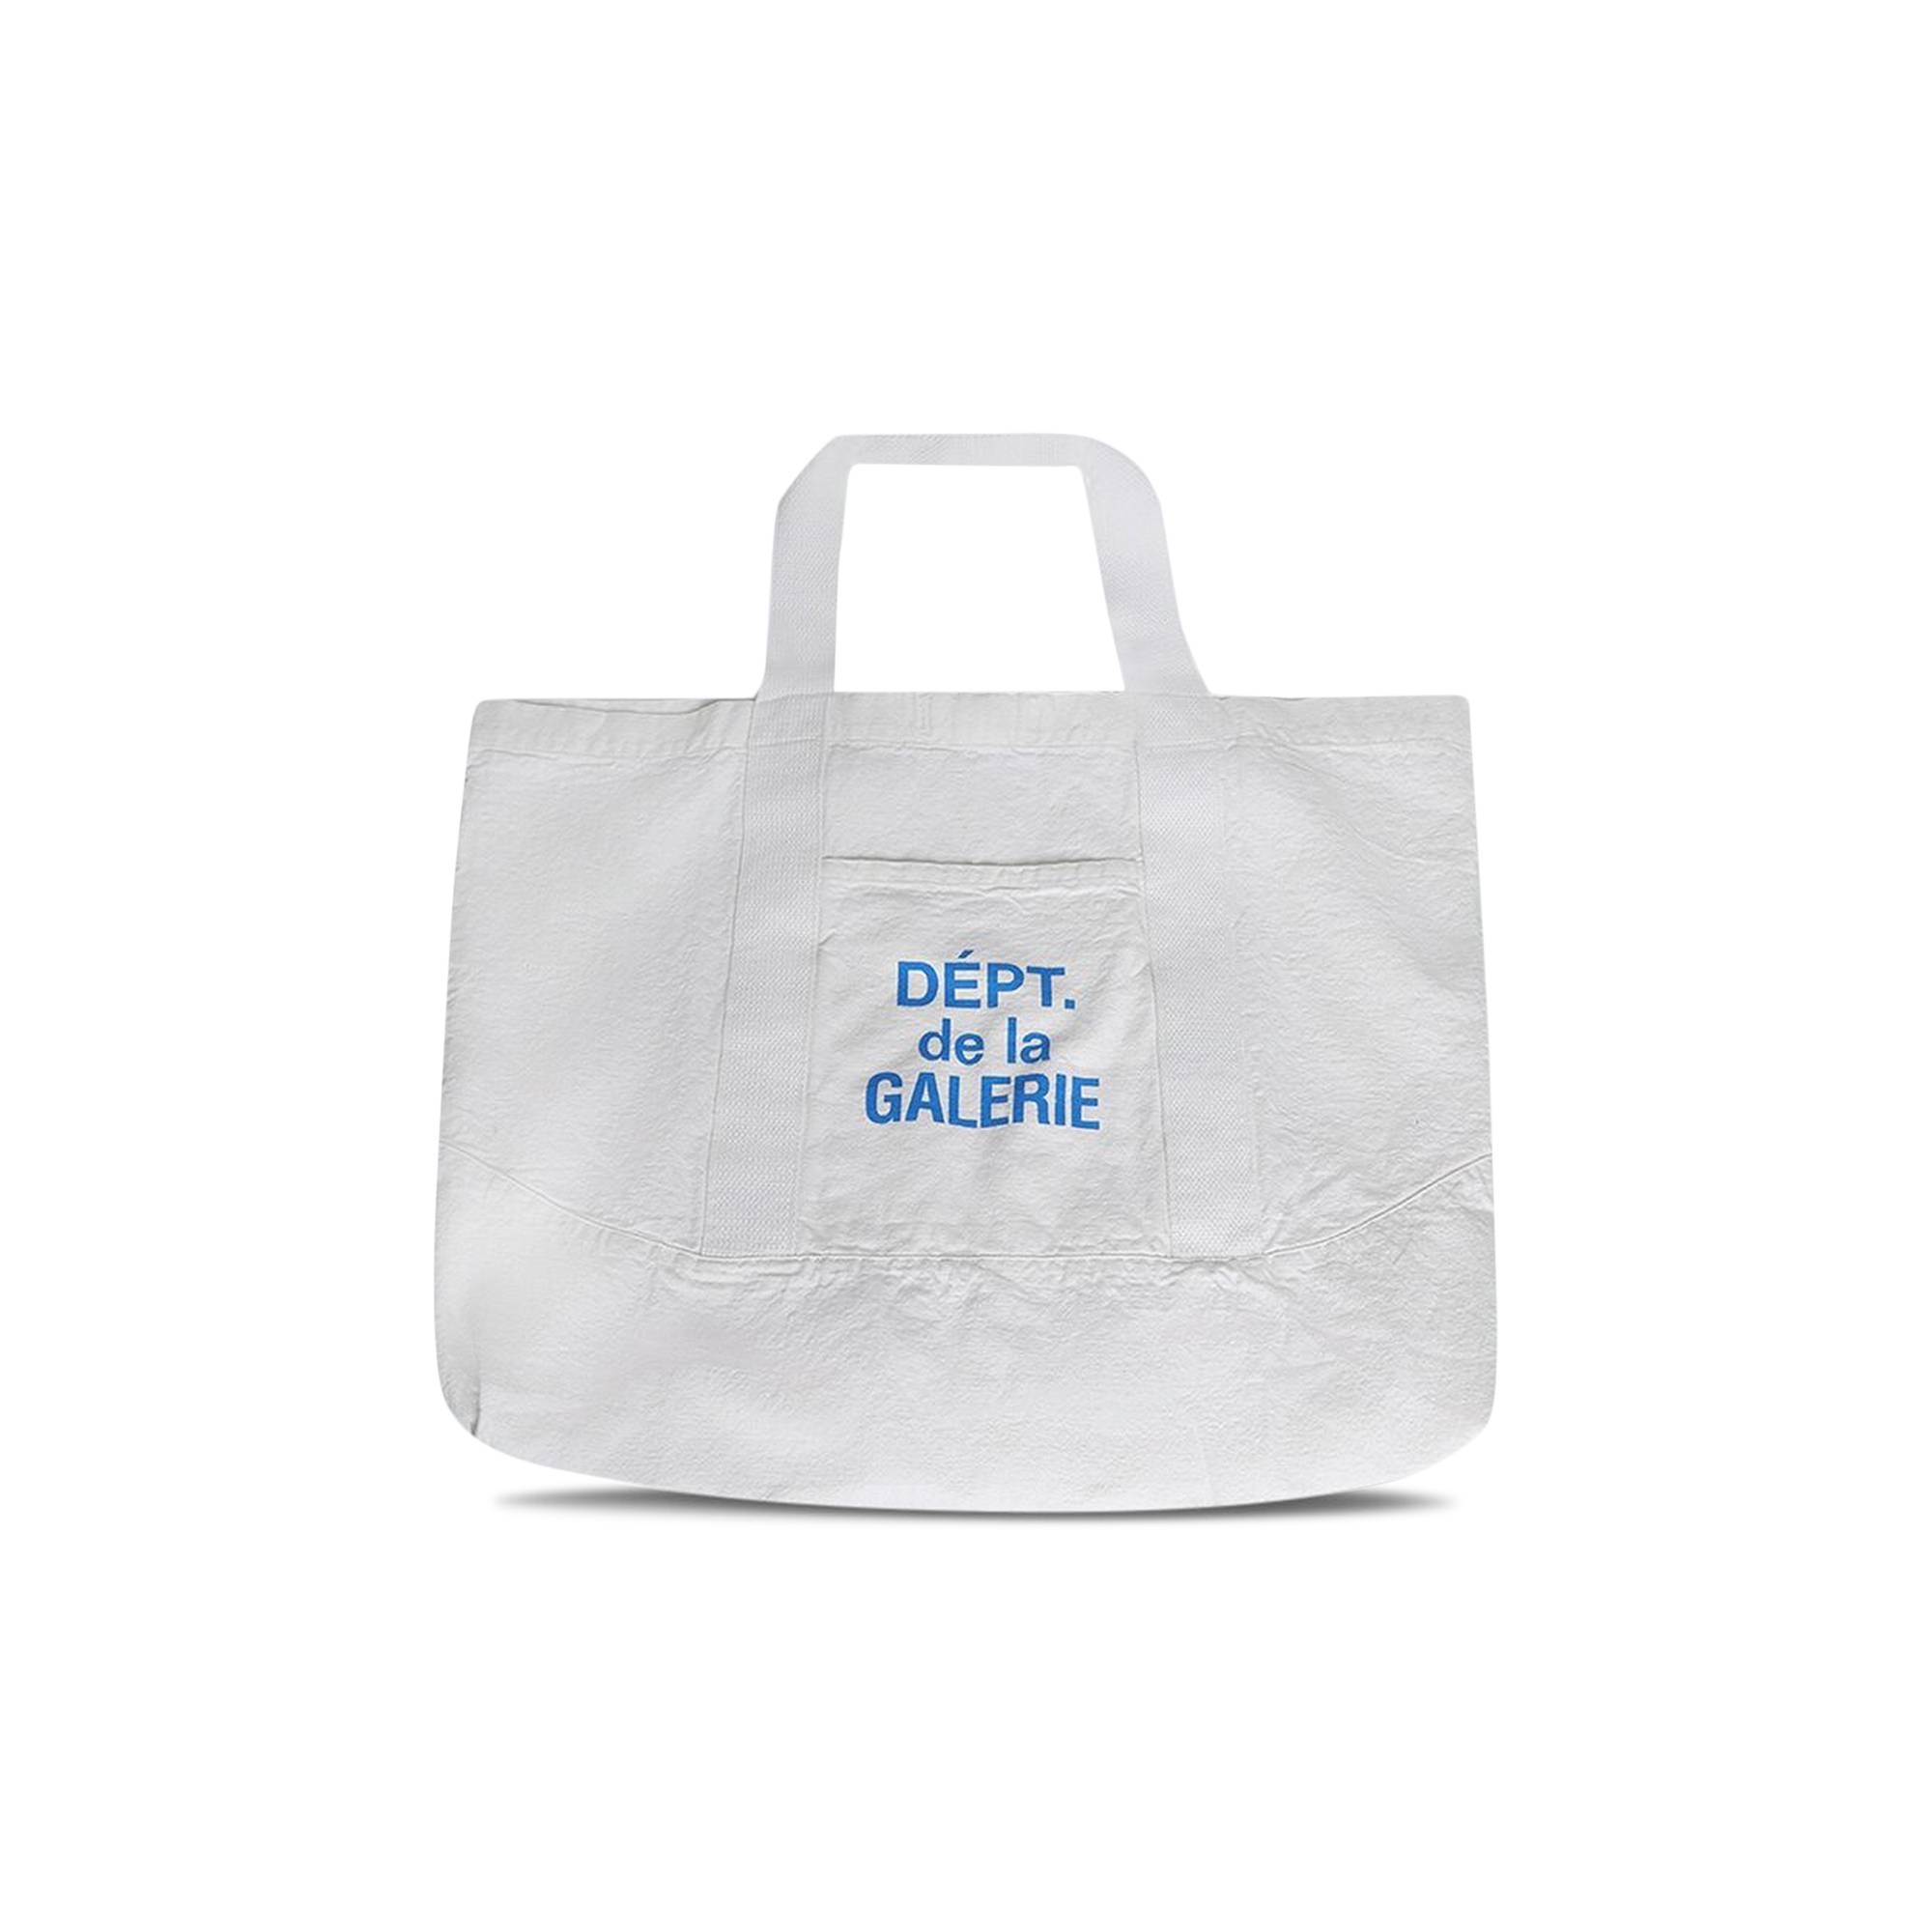 Gallery Dept. Logo Print Canvas Tote Bag 'White' - 1